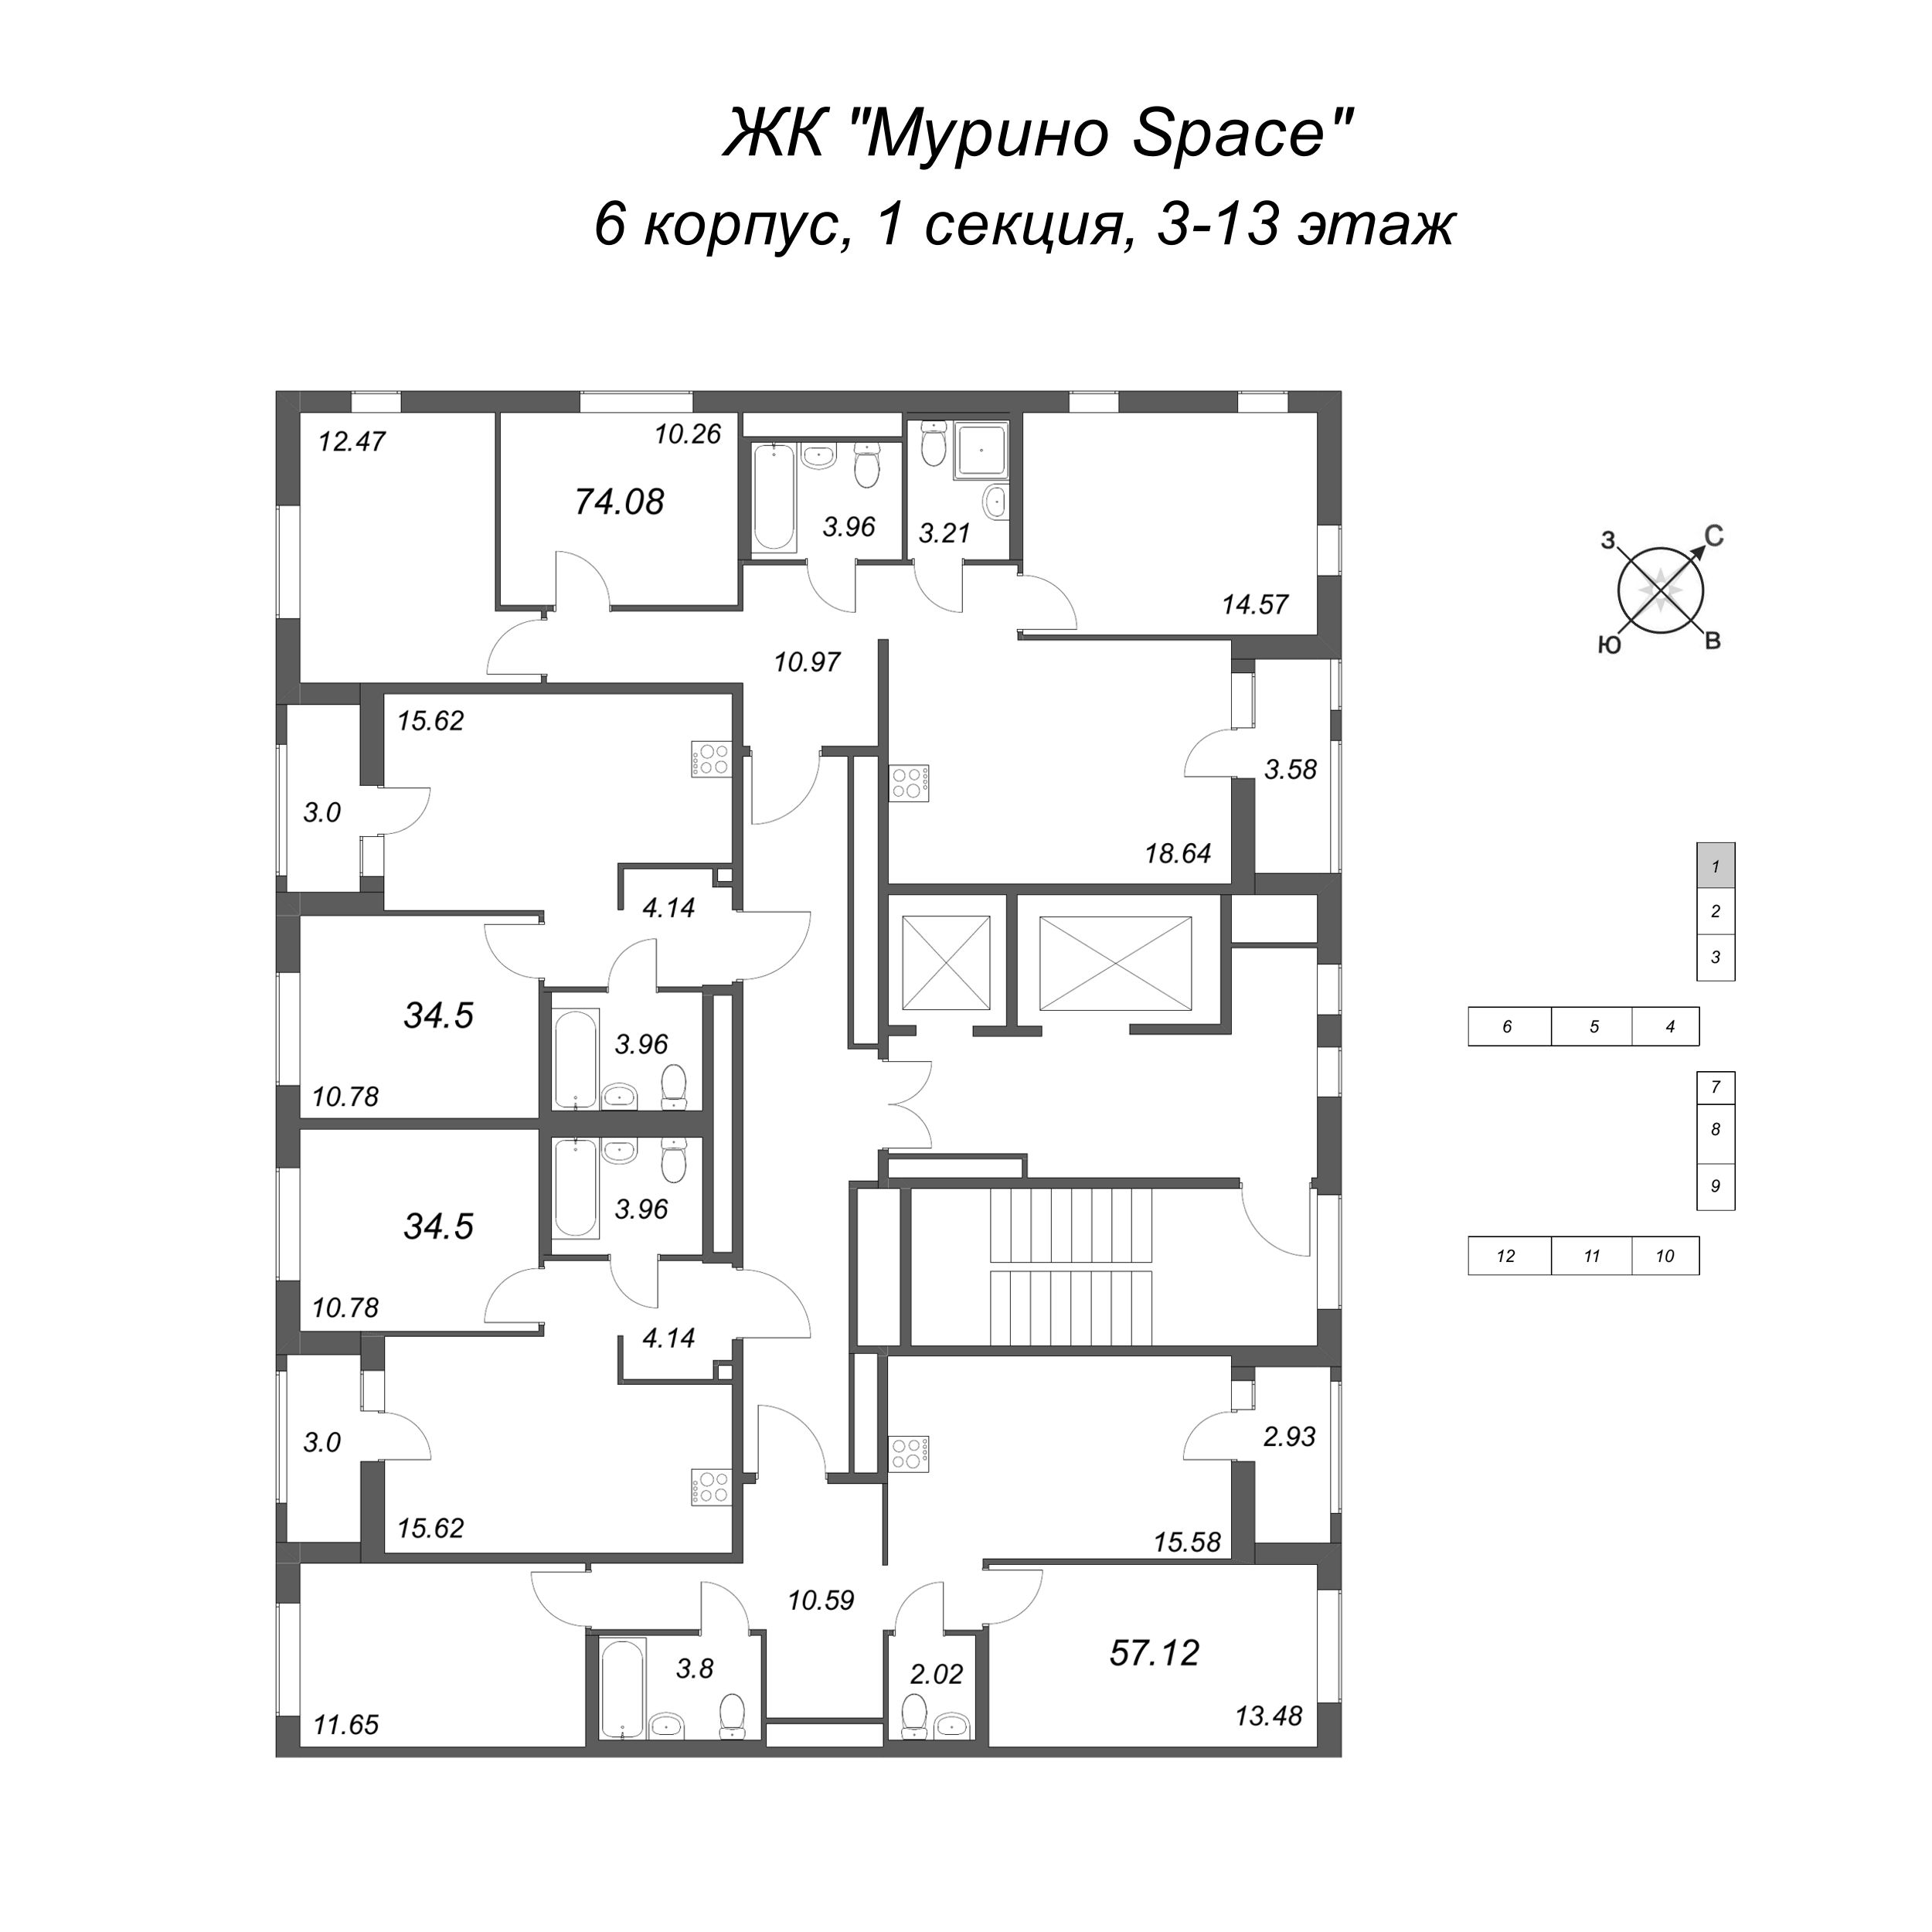 4-комнатная (Евро) квартира, 74.08 м² - планировка этажа